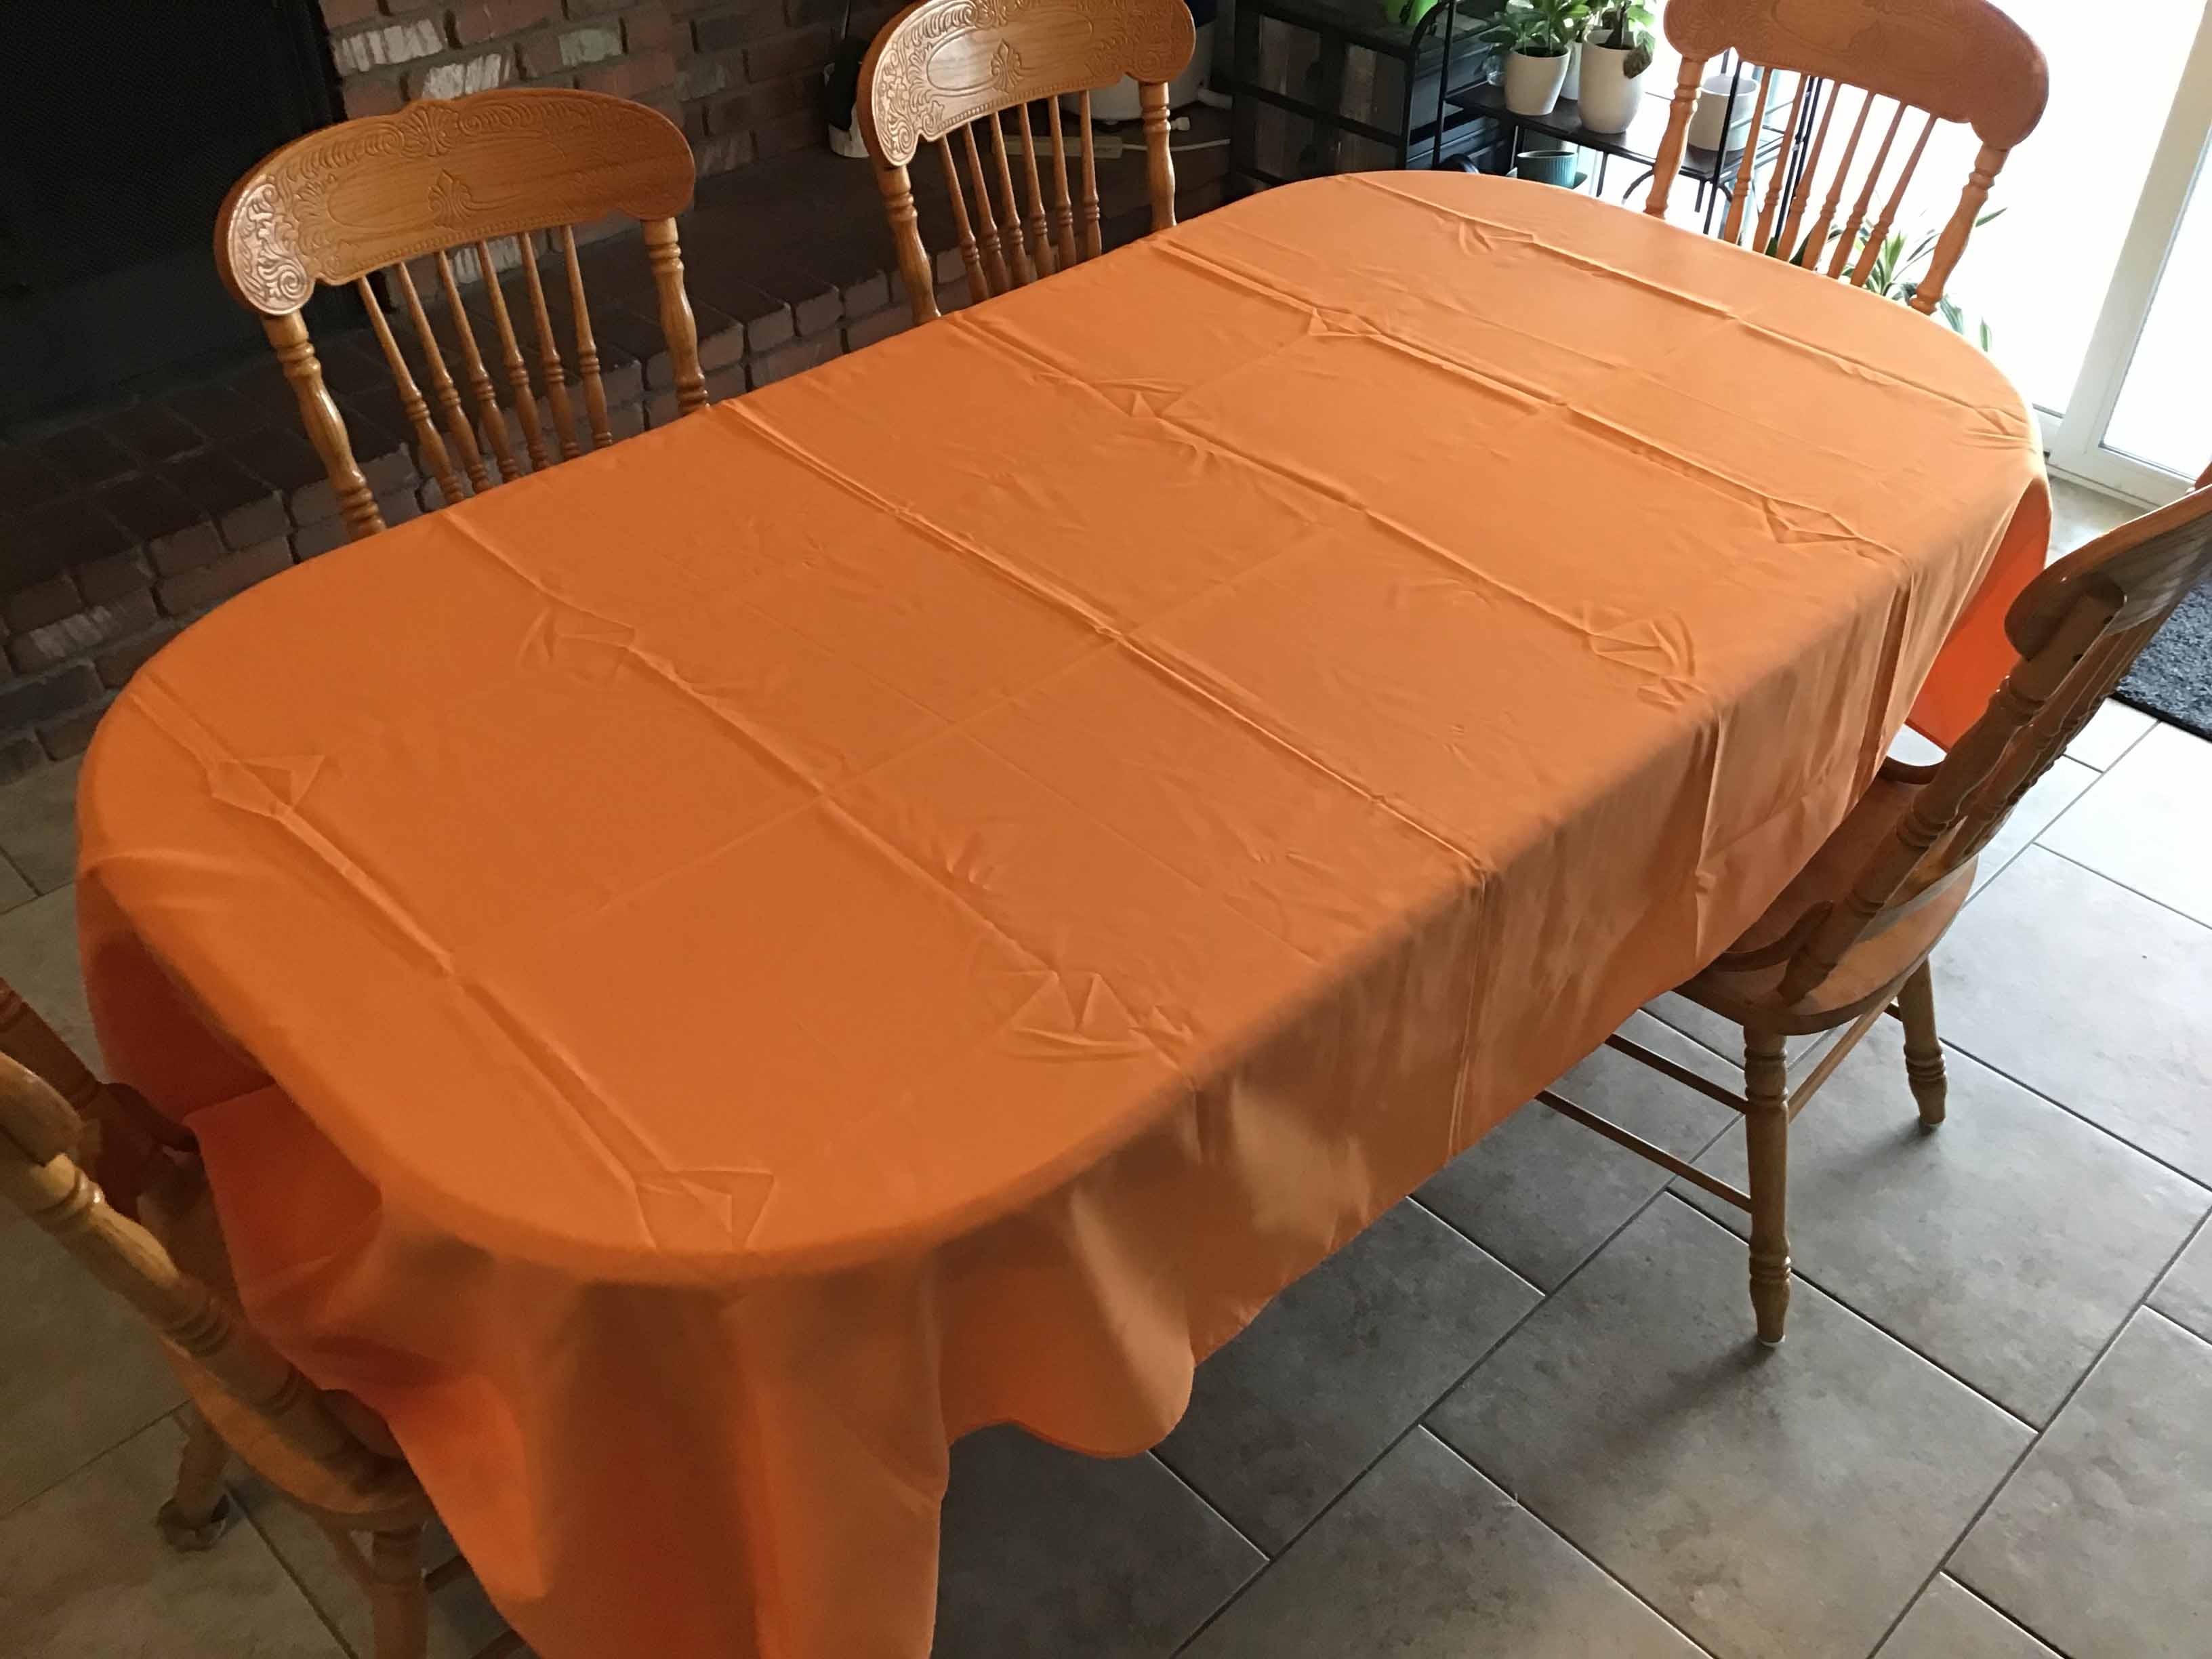 rectangle tablecloths (orange) - 60 x 102